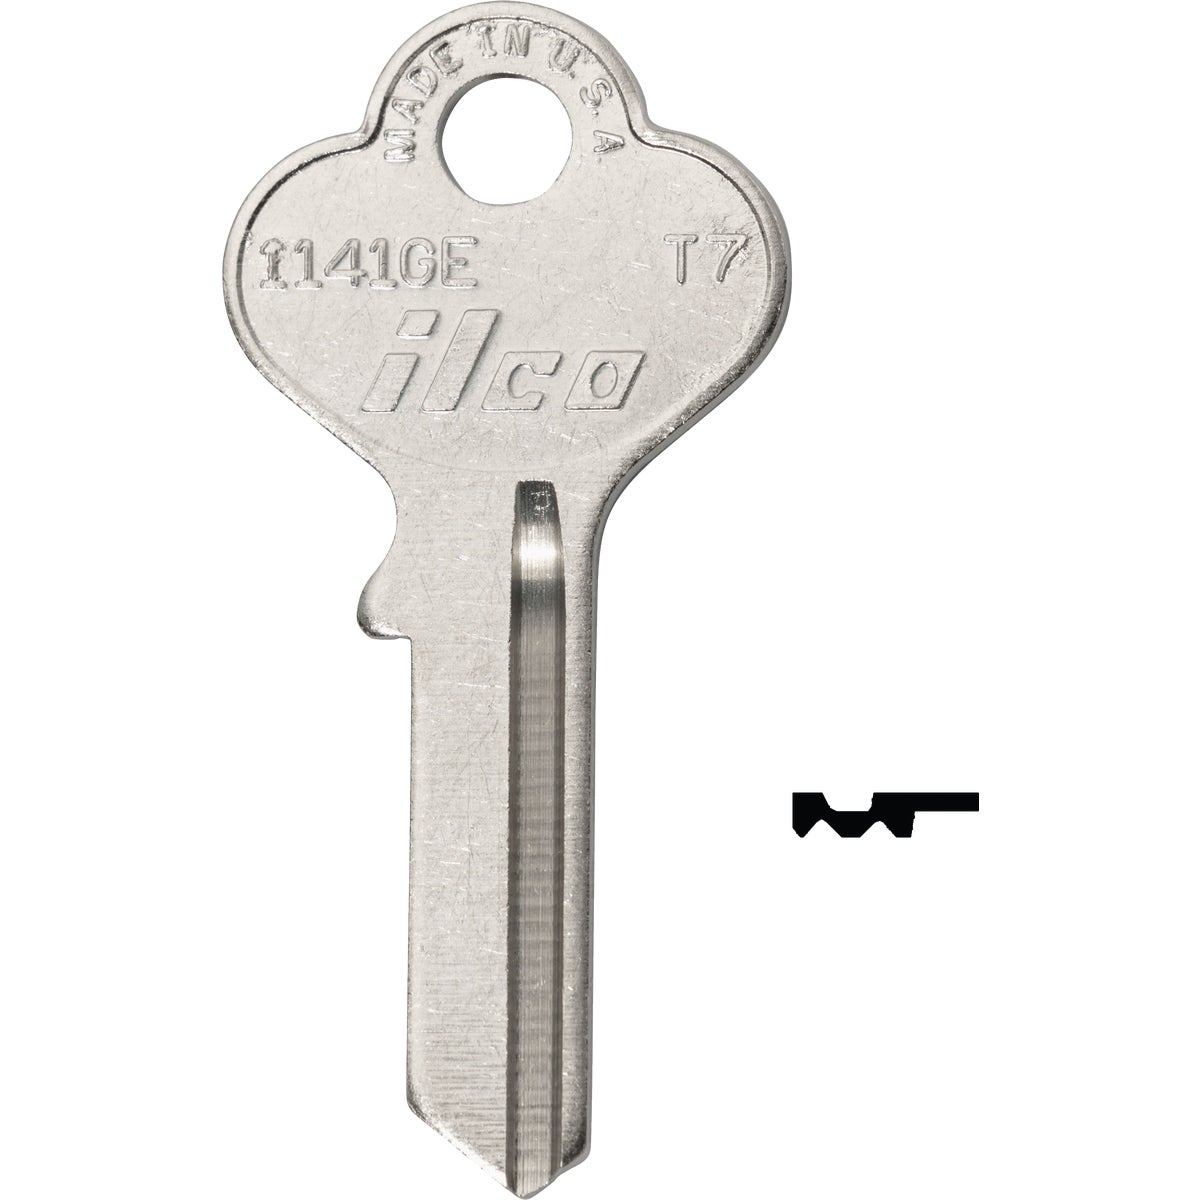 ILCO Taylor Nickel Plated Garage Door Key, T7/1141GE (10-Pack)